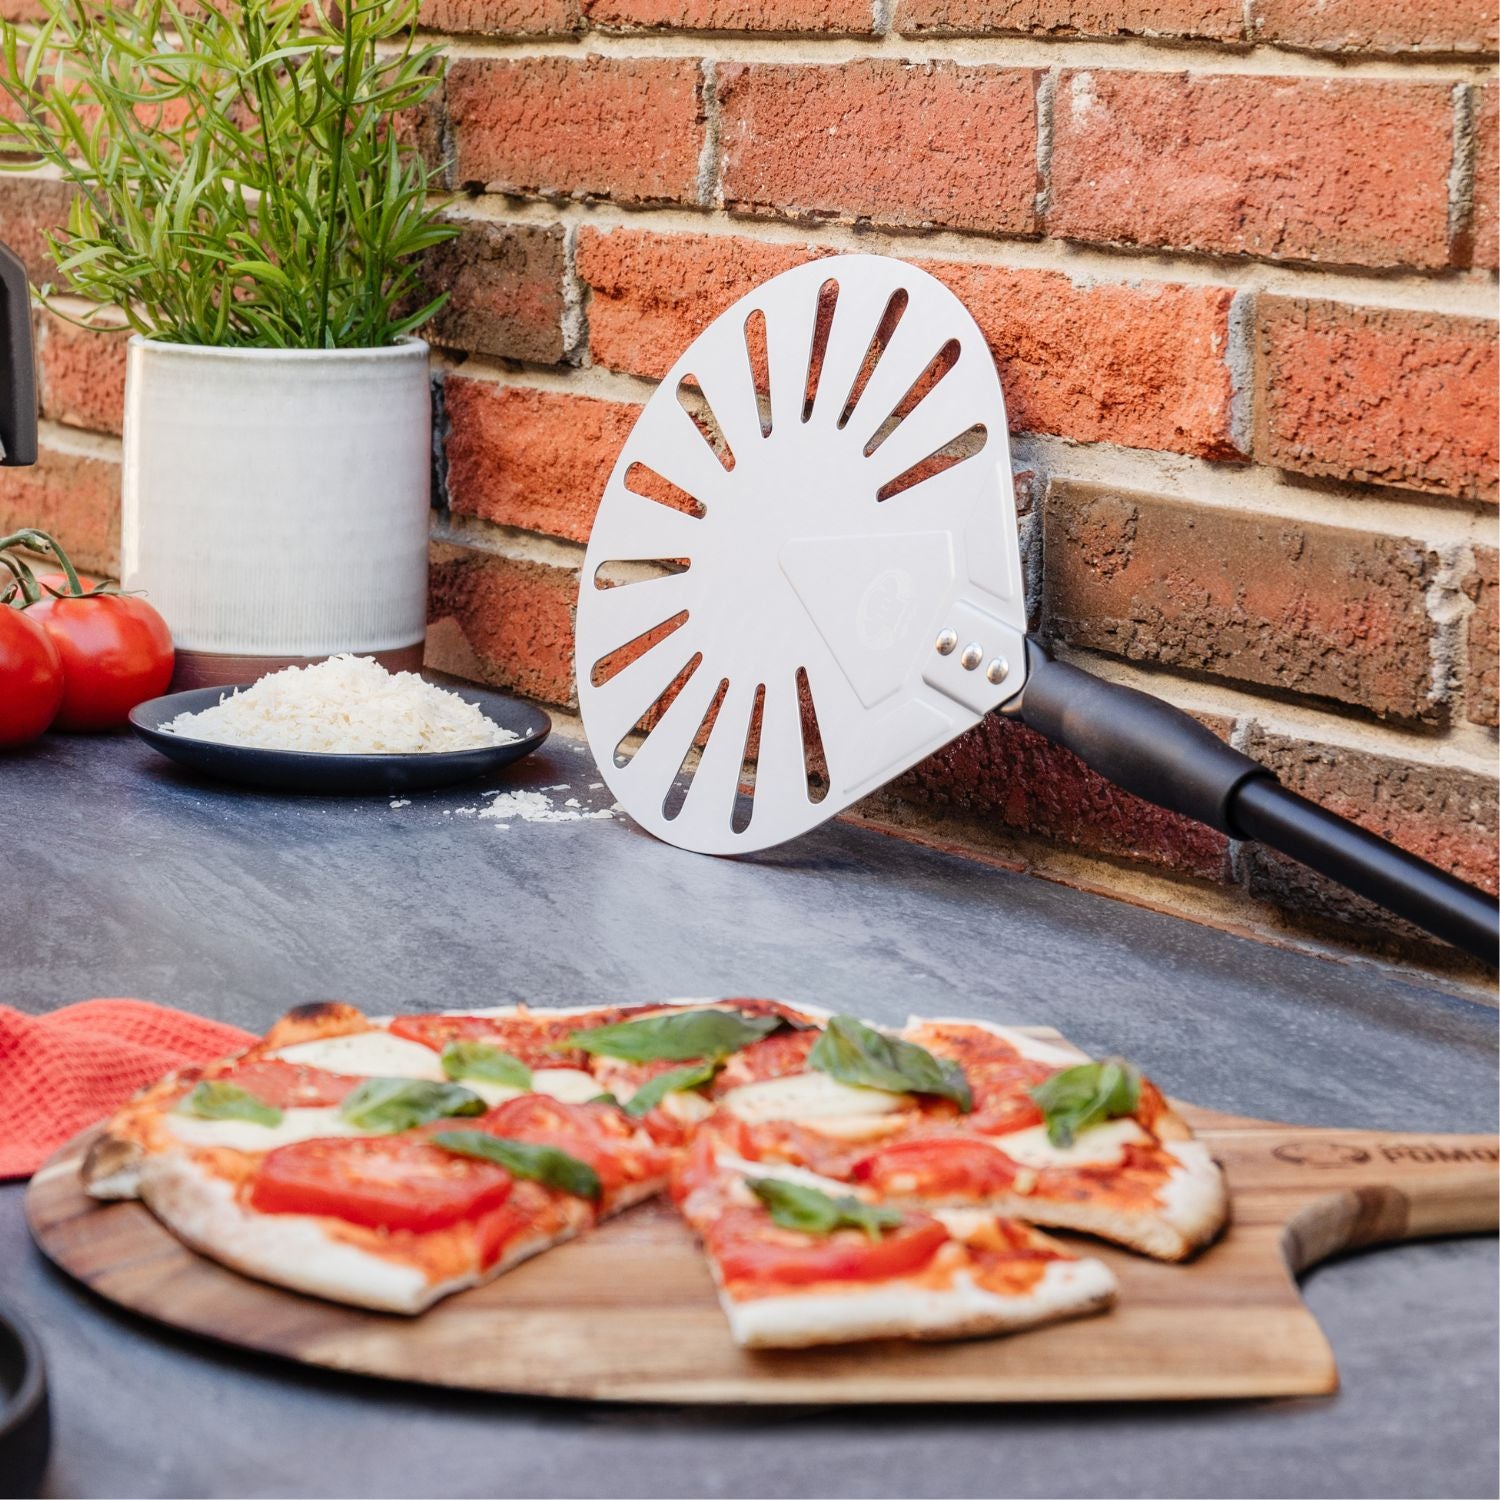 Chef Pomodoro Aluminum 9-Inch Turning Pizza Peel Detachable Handle